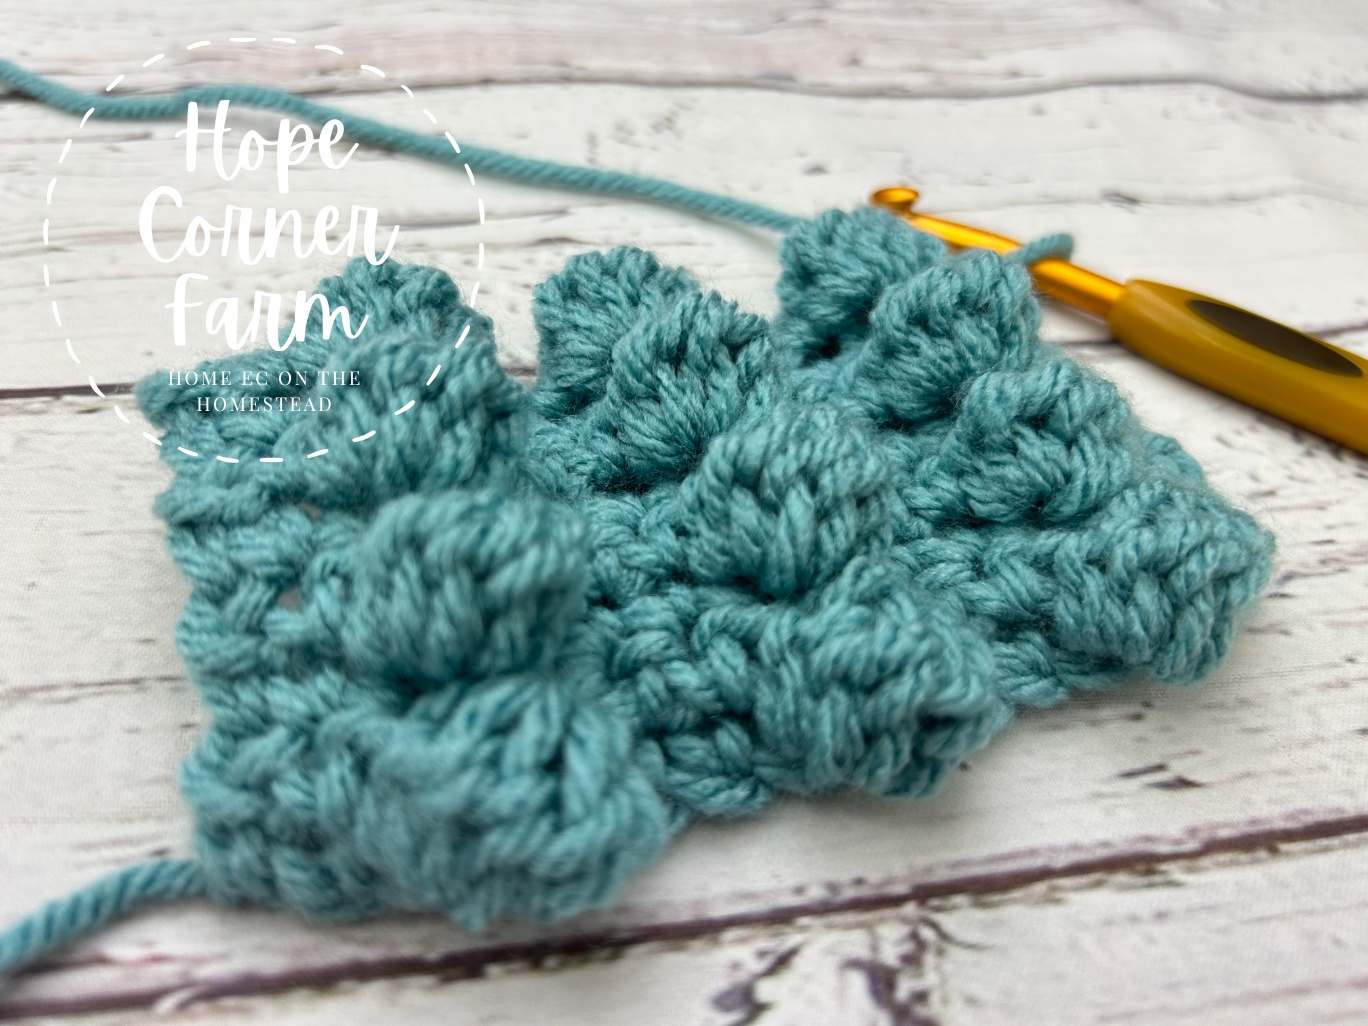 How to Spot Stitch in Crochet – Textured Crochet Stitch